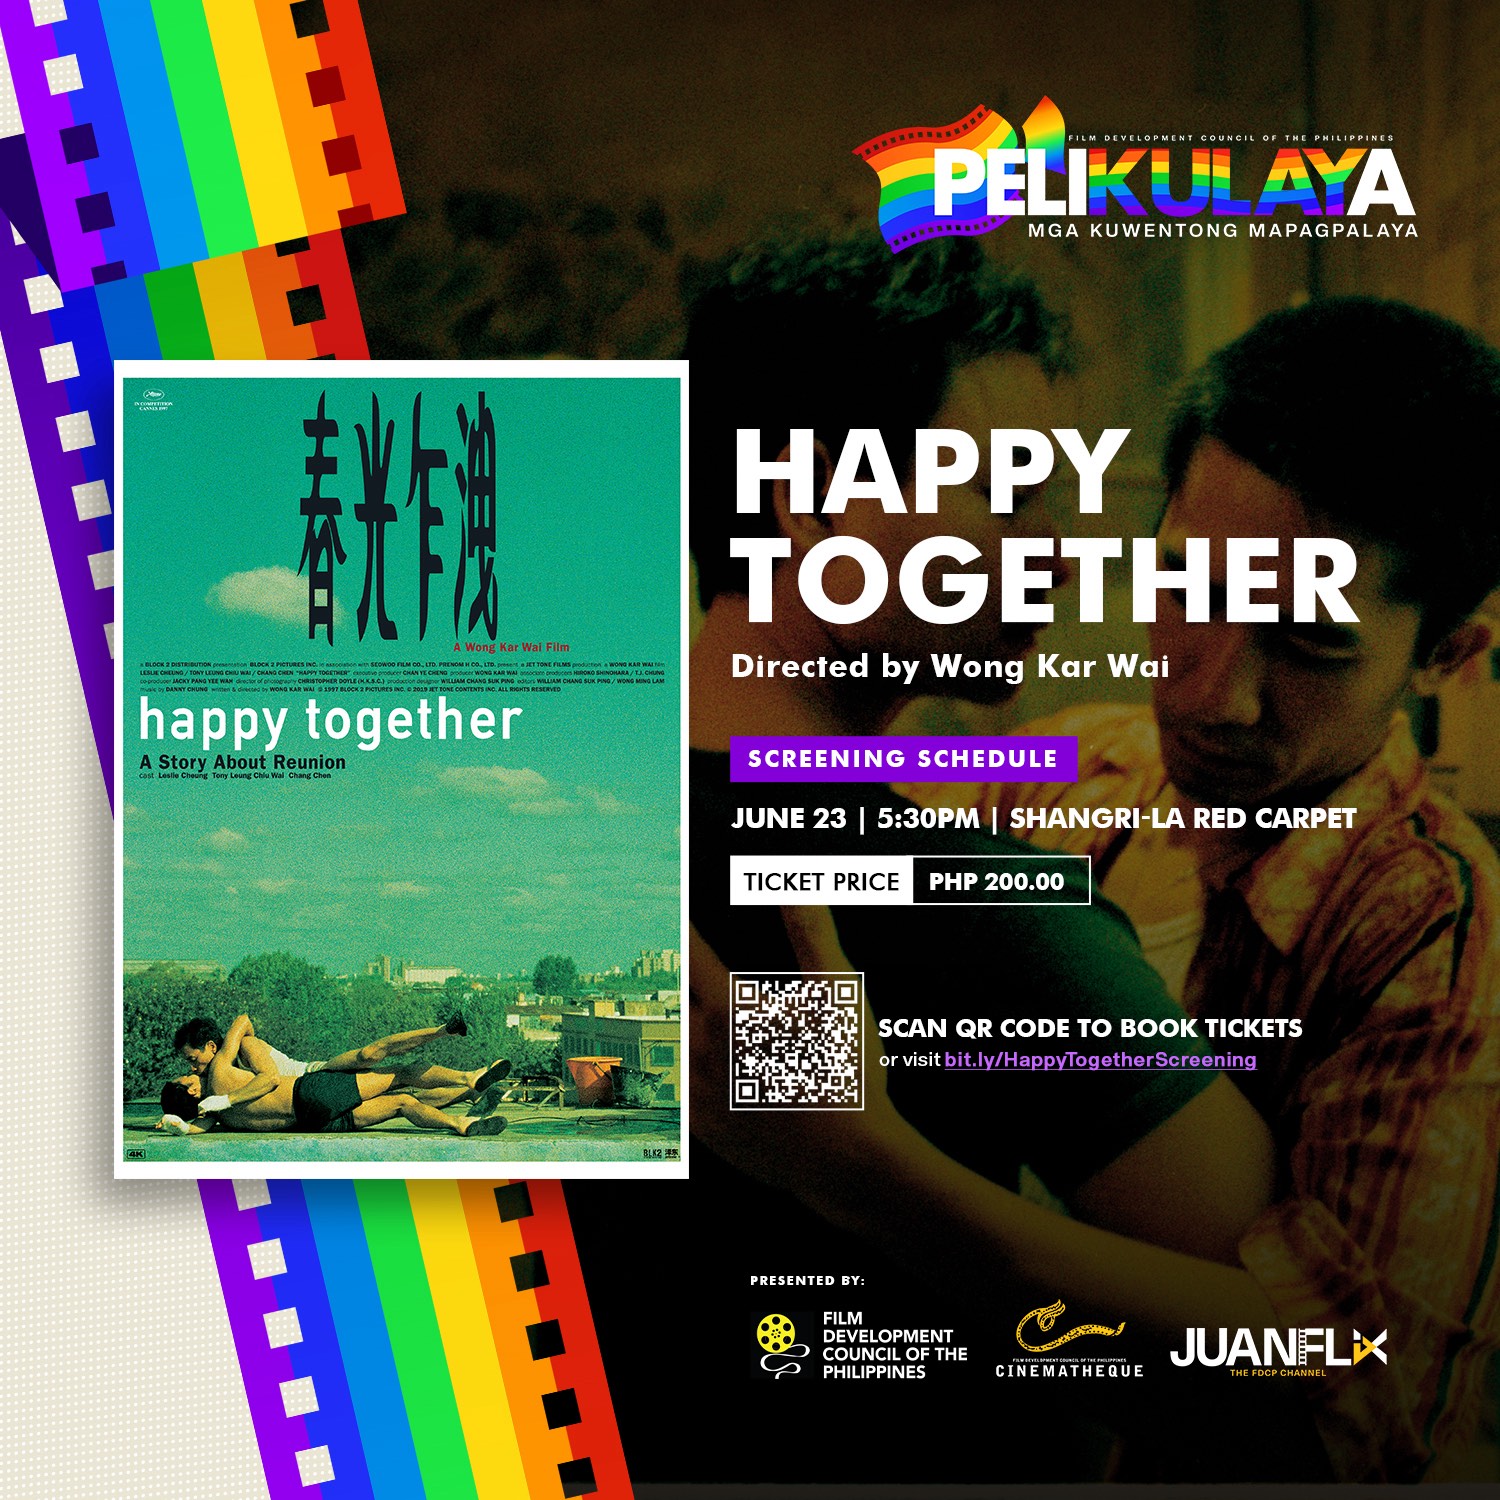 PeliKULAYA screening schedule of Wong Kar Wai's Happy Together